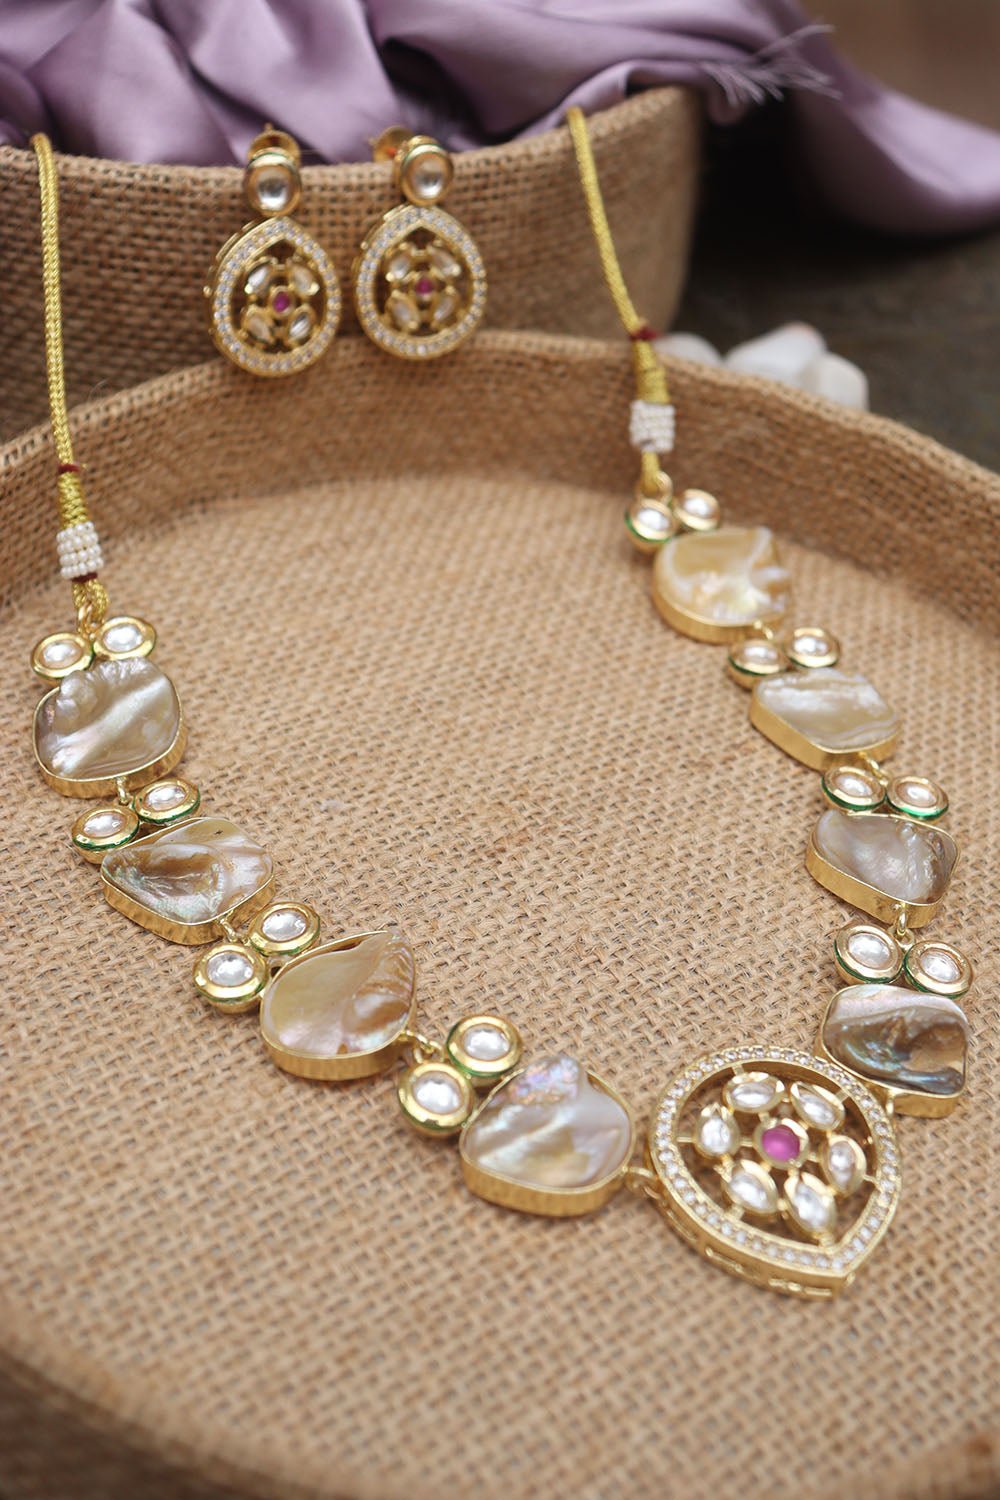 Shop Luxurionworld's Exclusive Necklace Set for a Graceful Look - Luxurion World